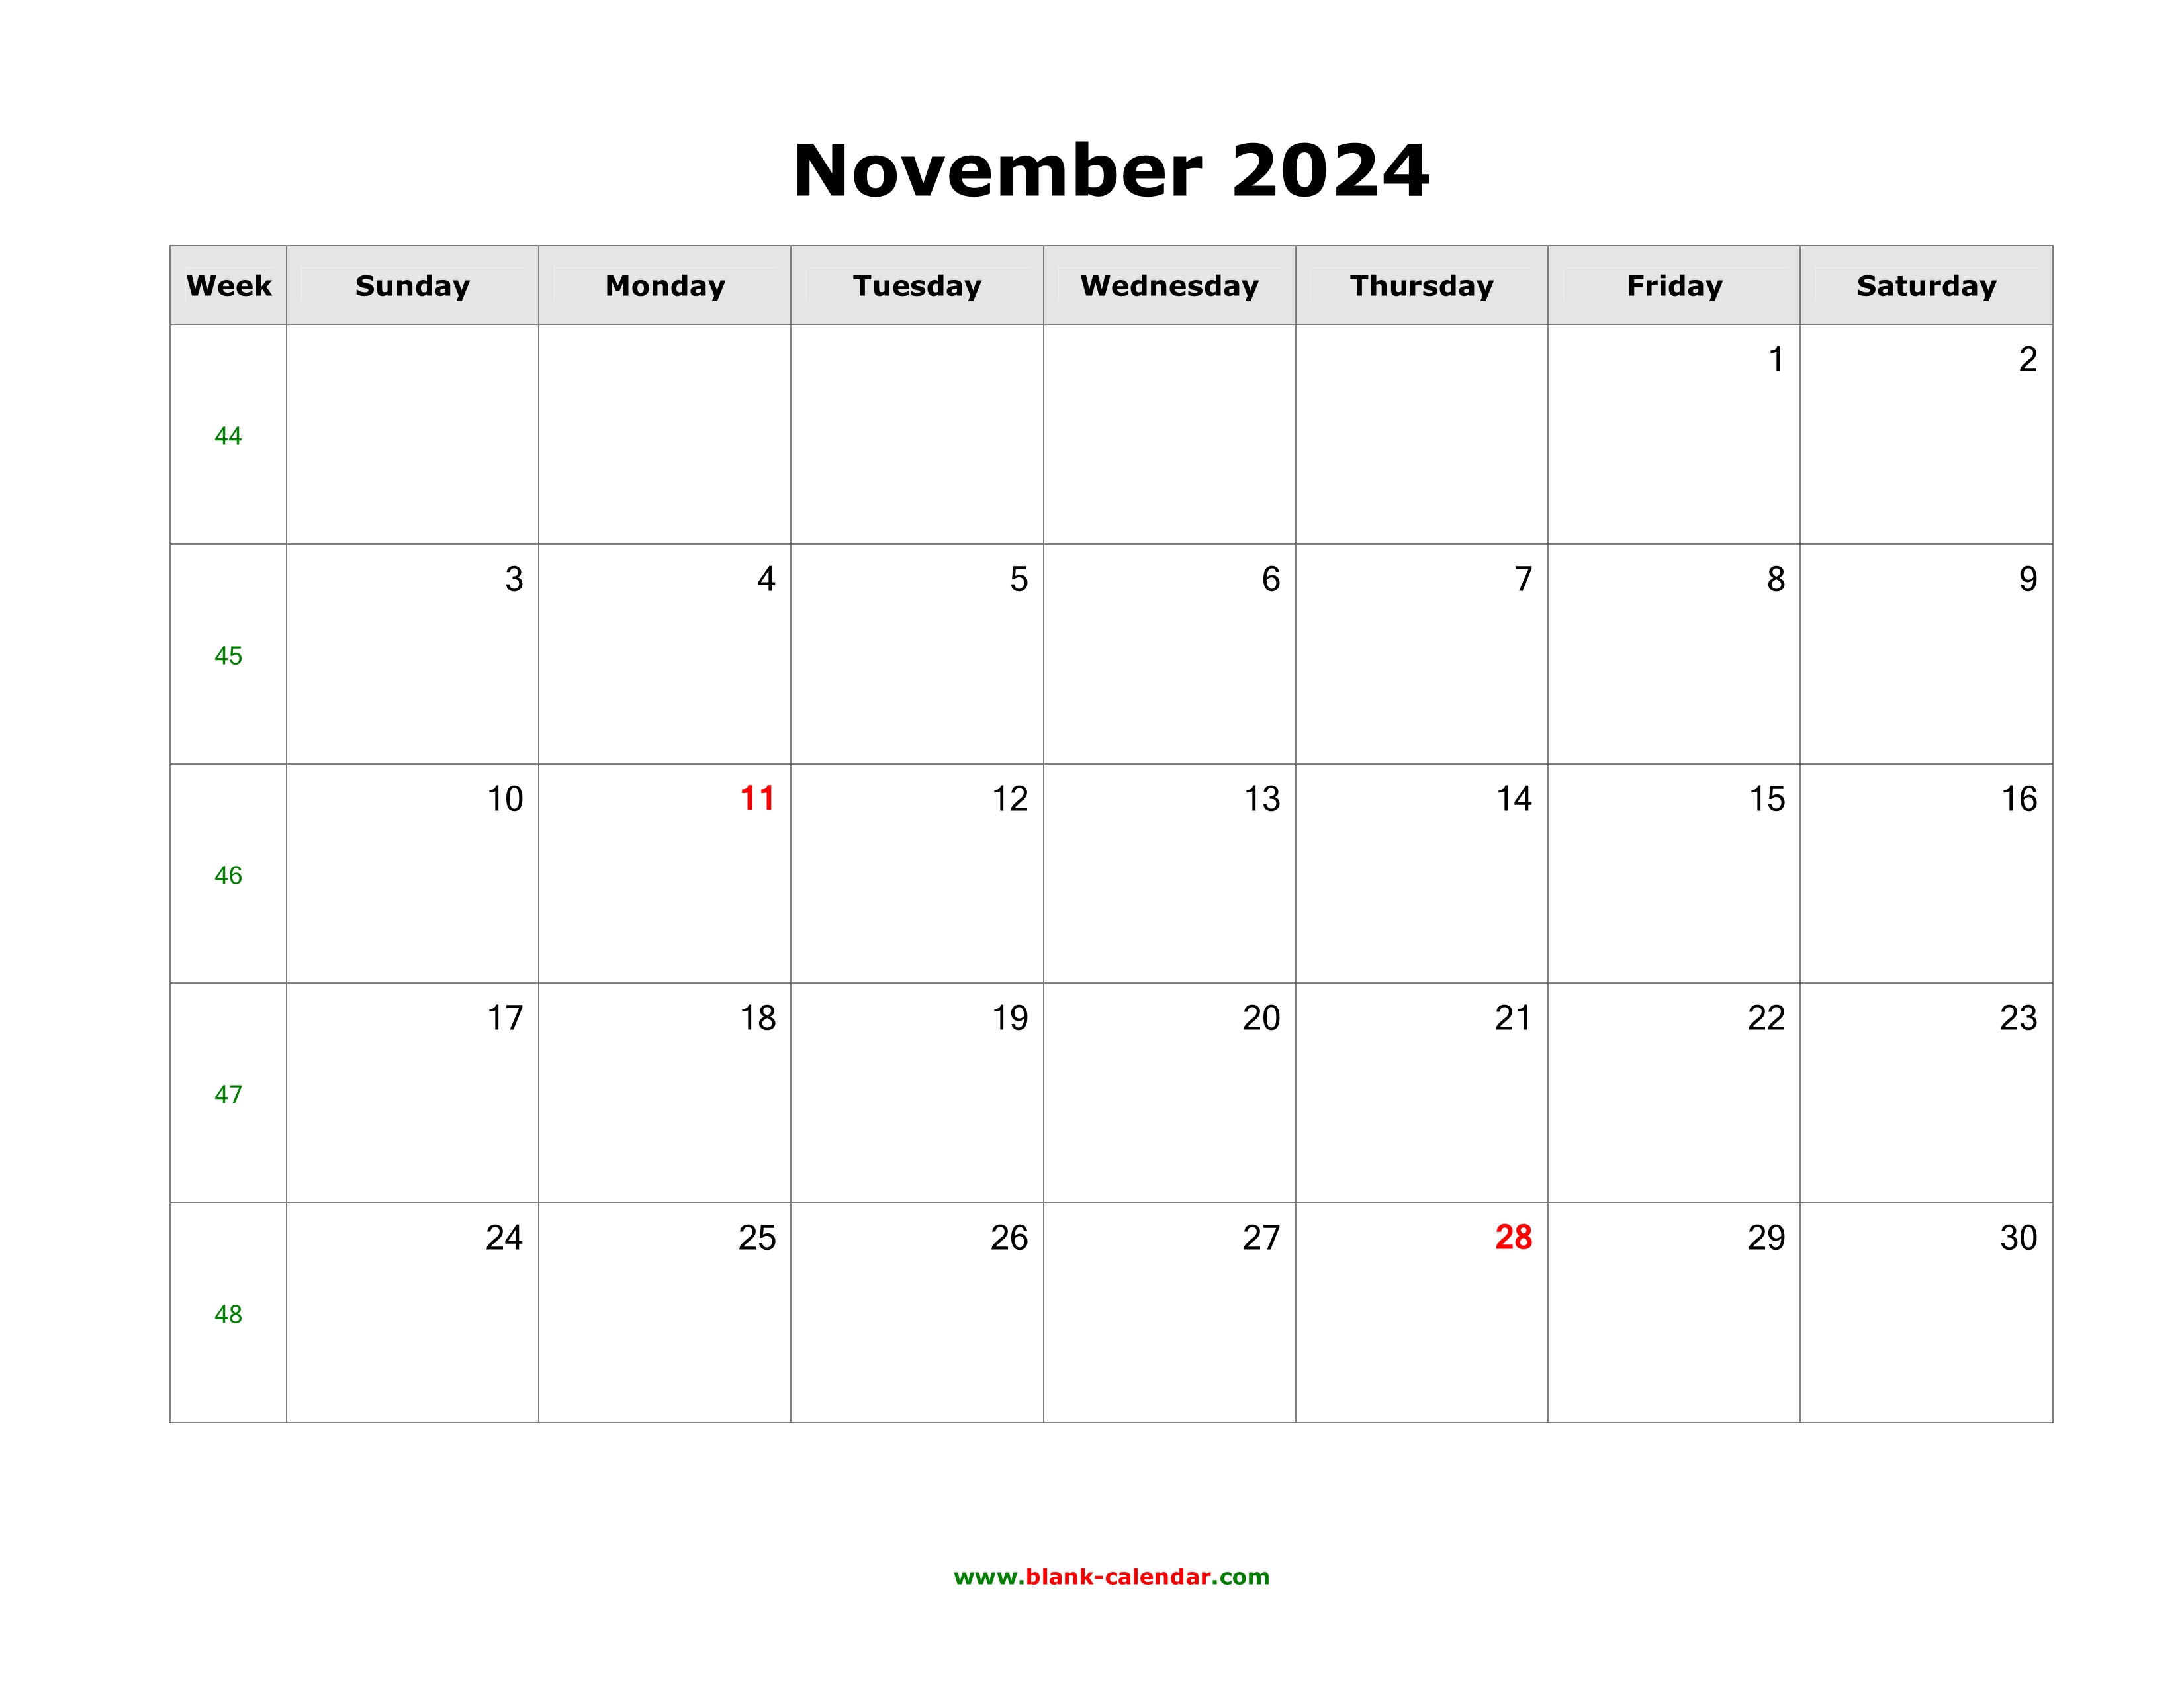 Download November 2024 Blank Calendar (horizontal)